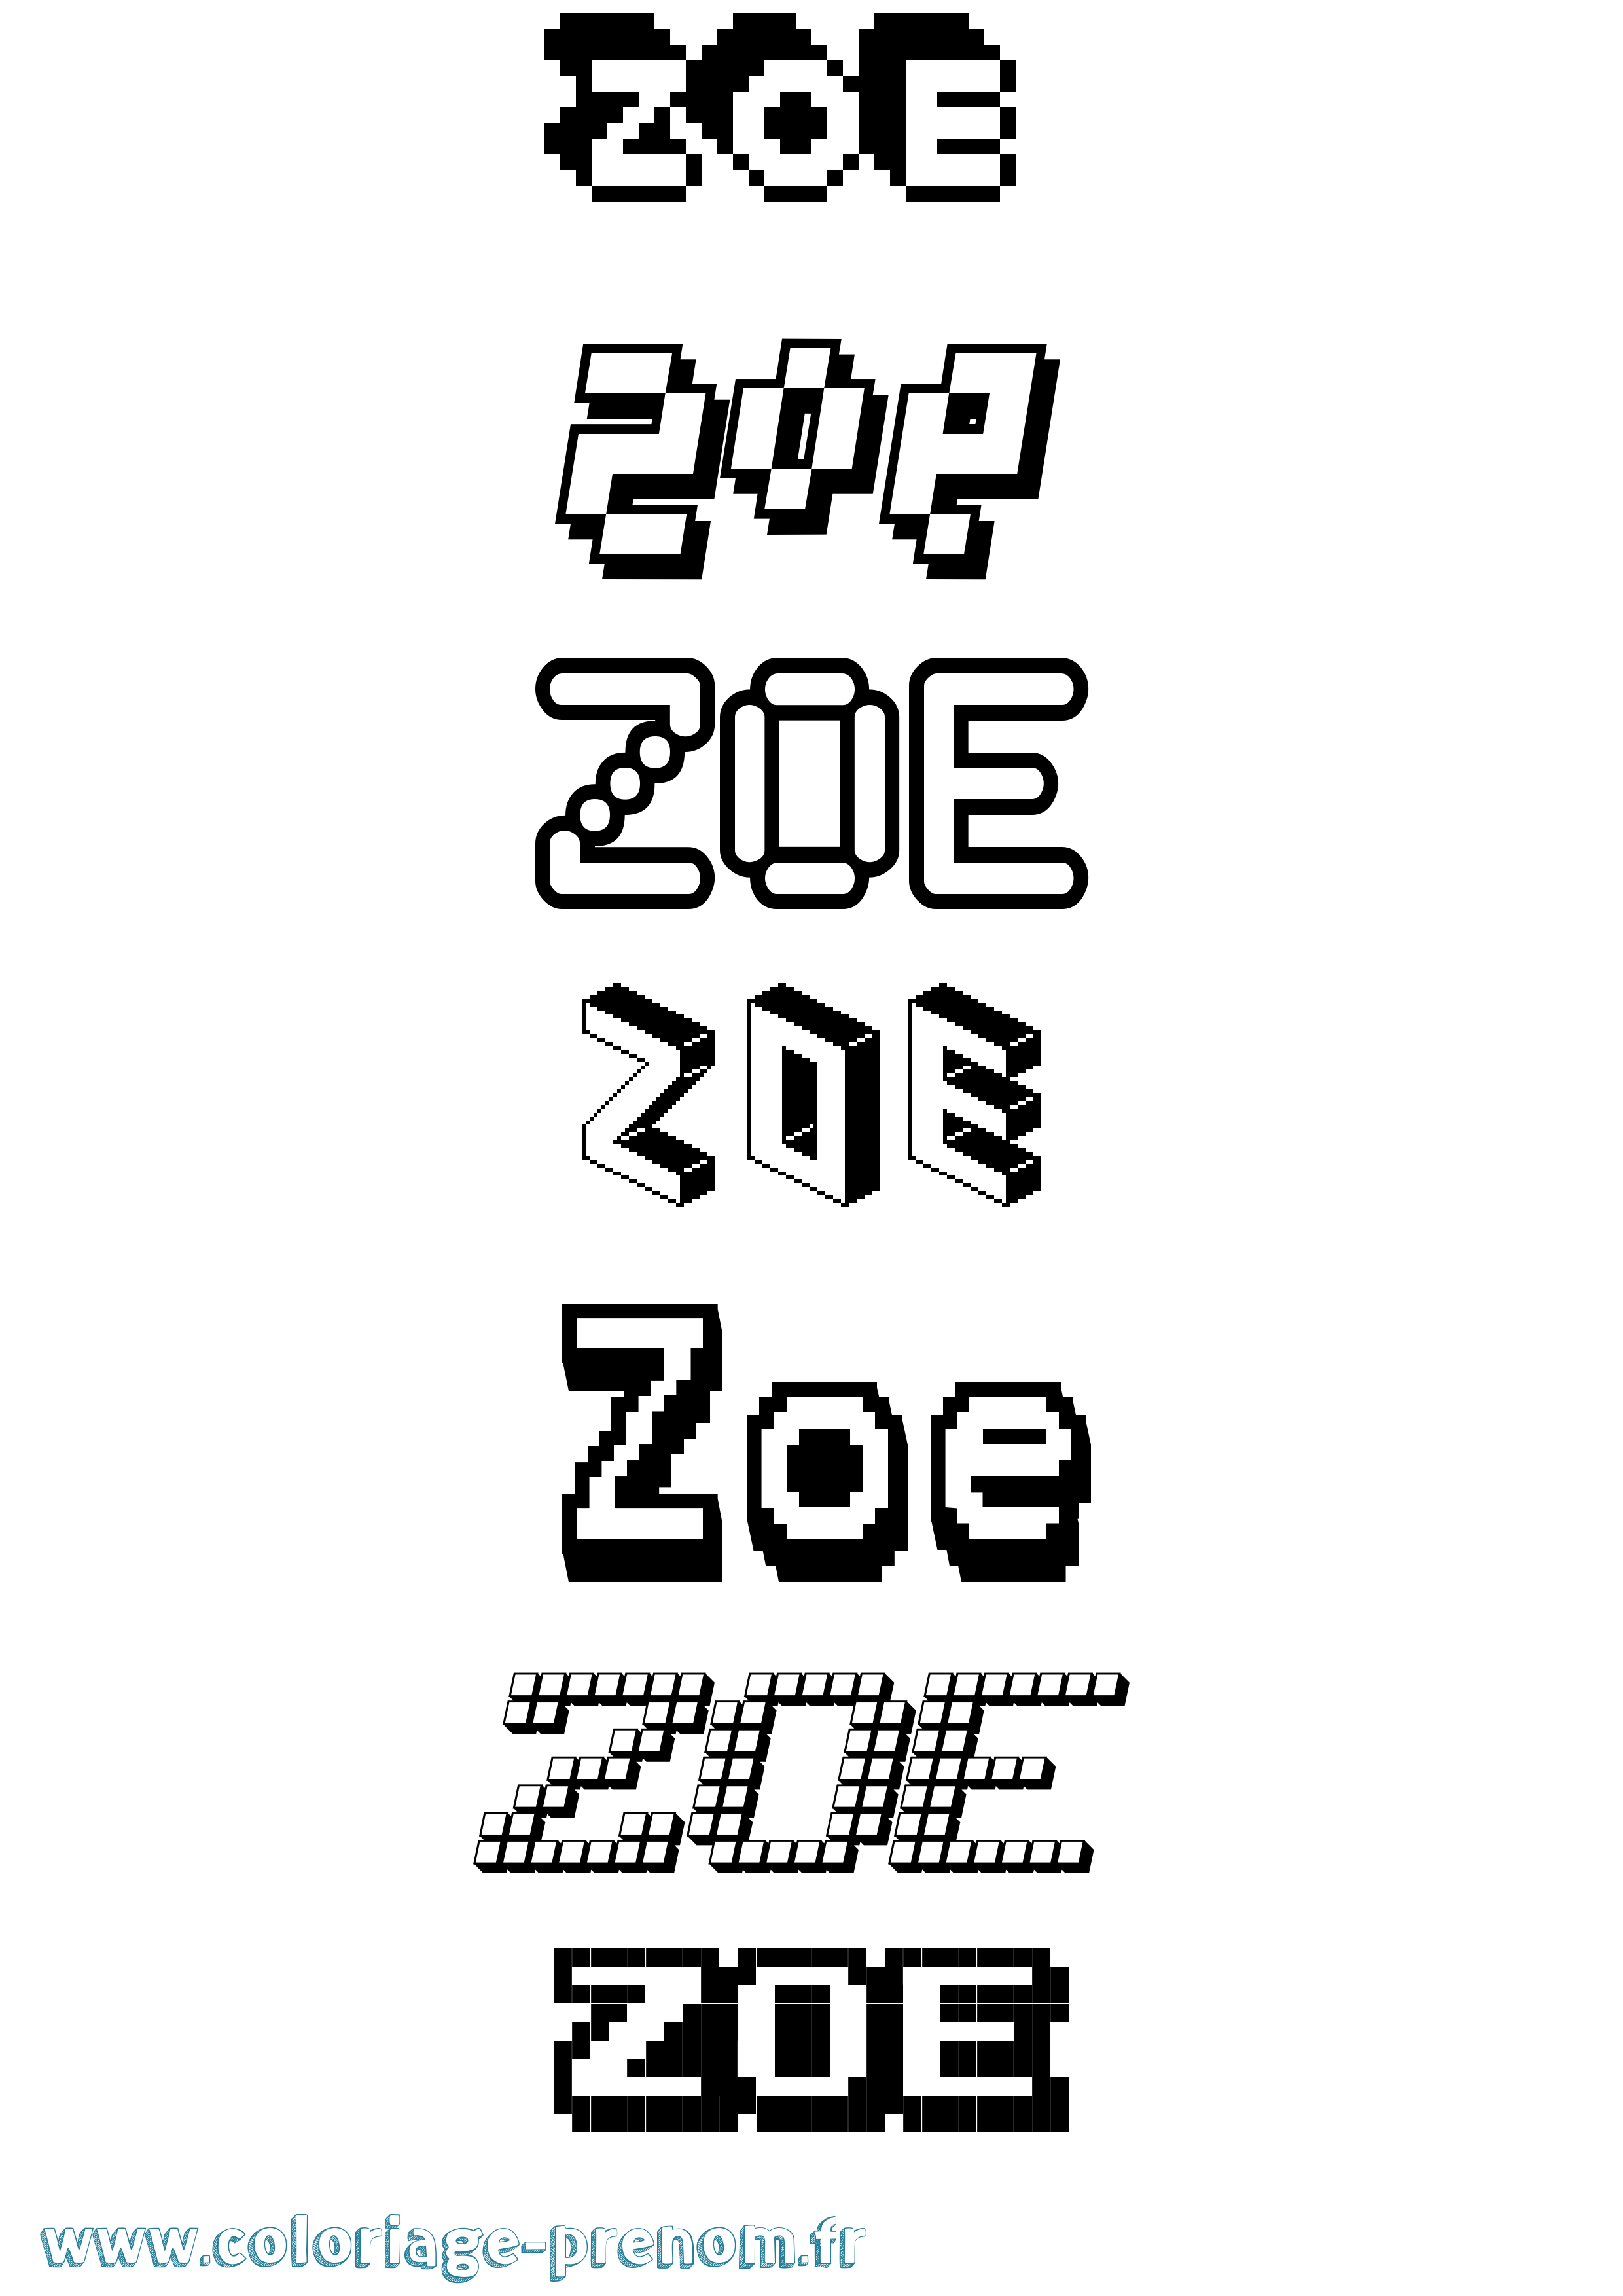 Coloriage prénom Zoe Pixel